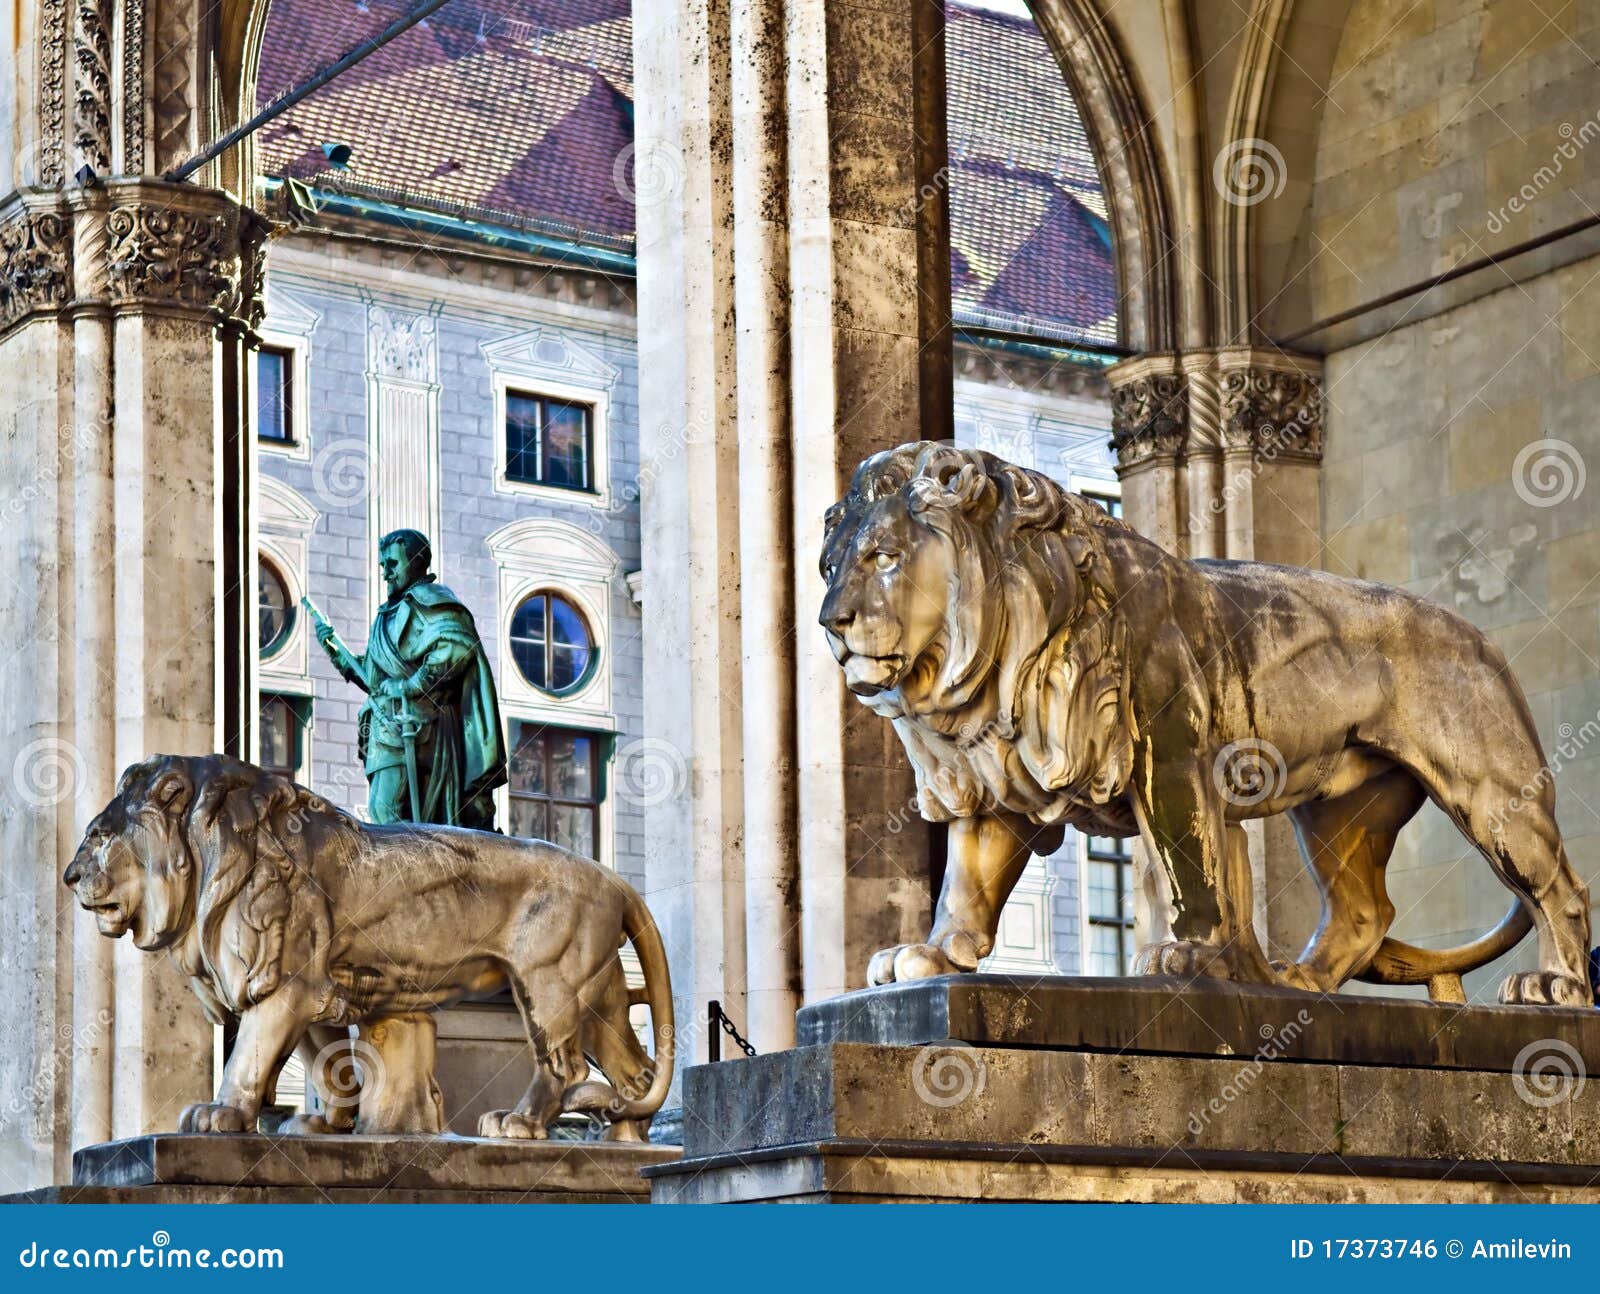 lions statues